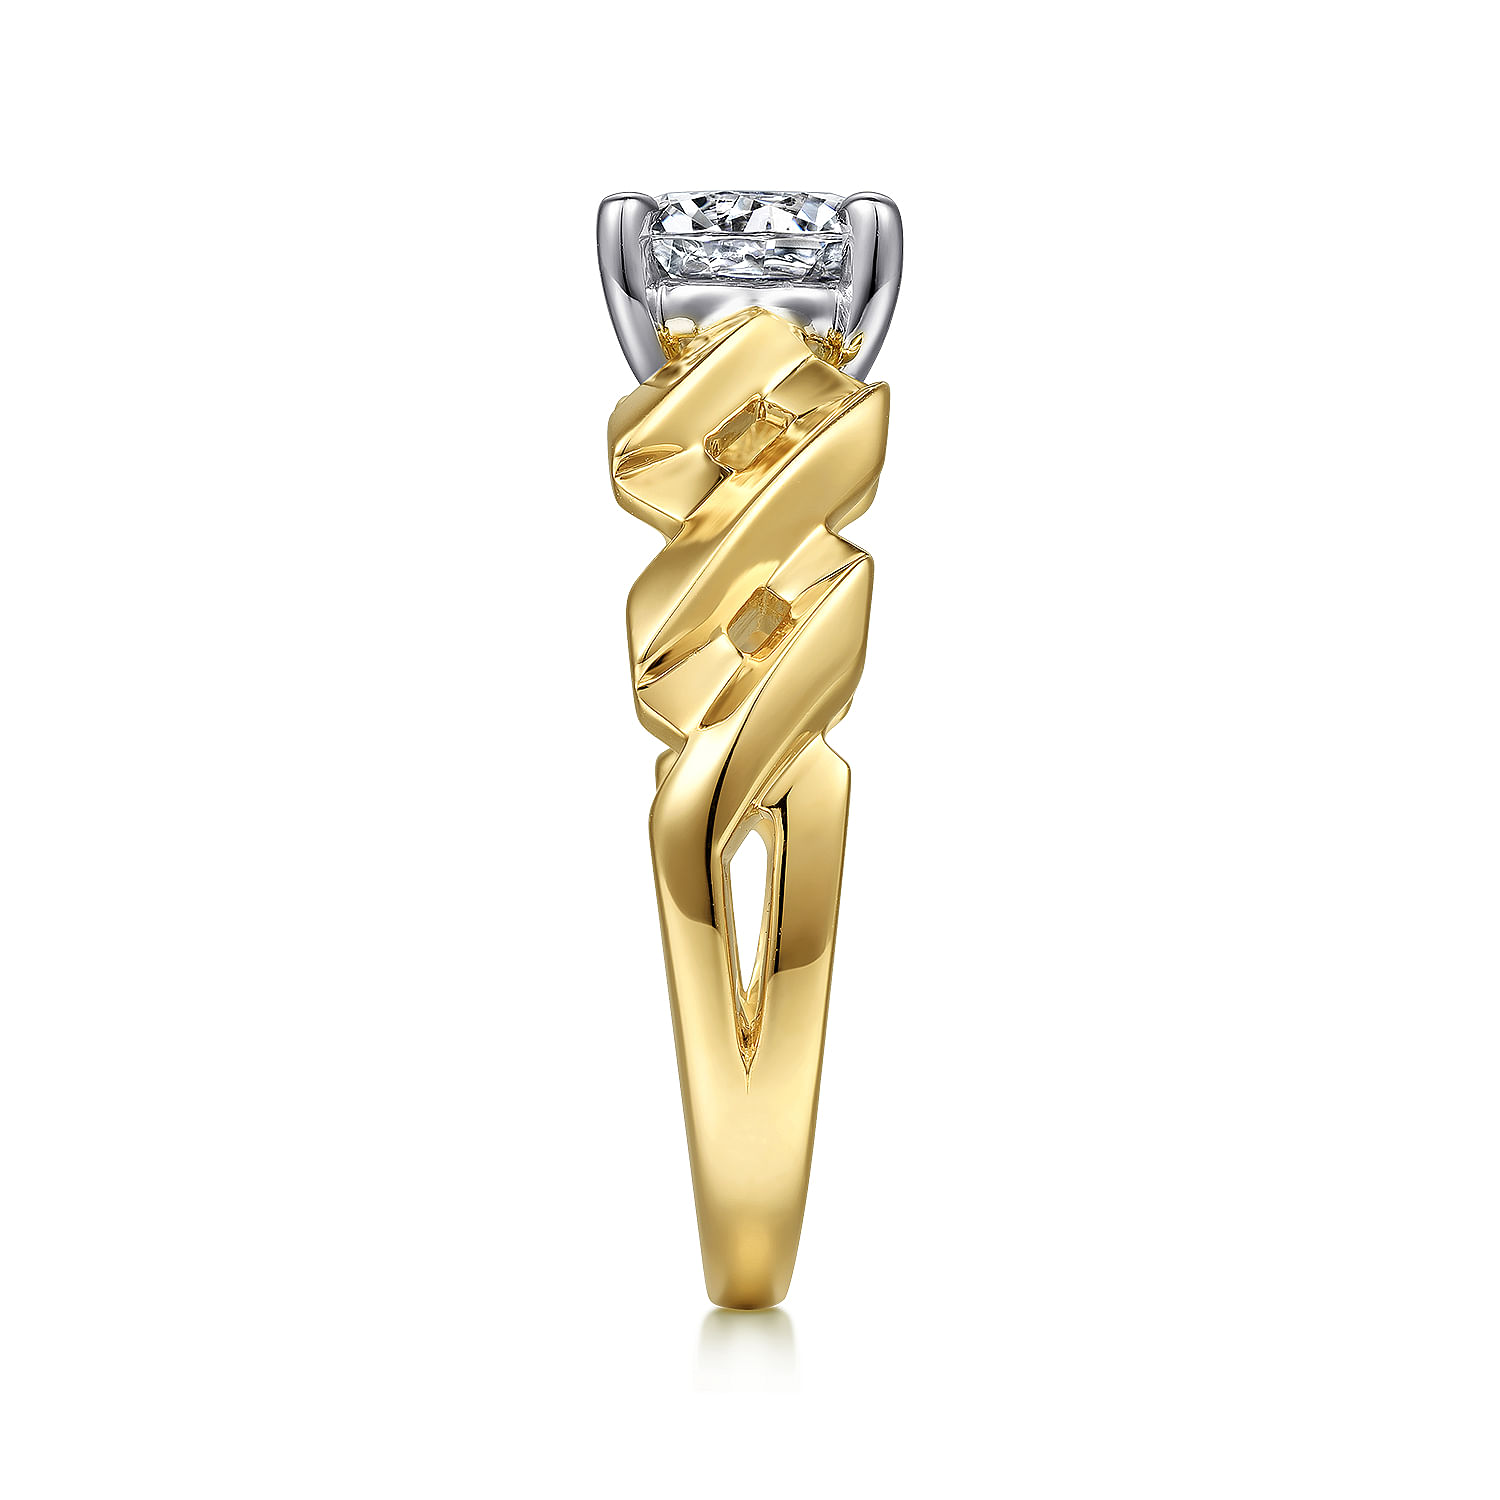 14K White-Yellow Gold Twisted Diamond Engagement Ring